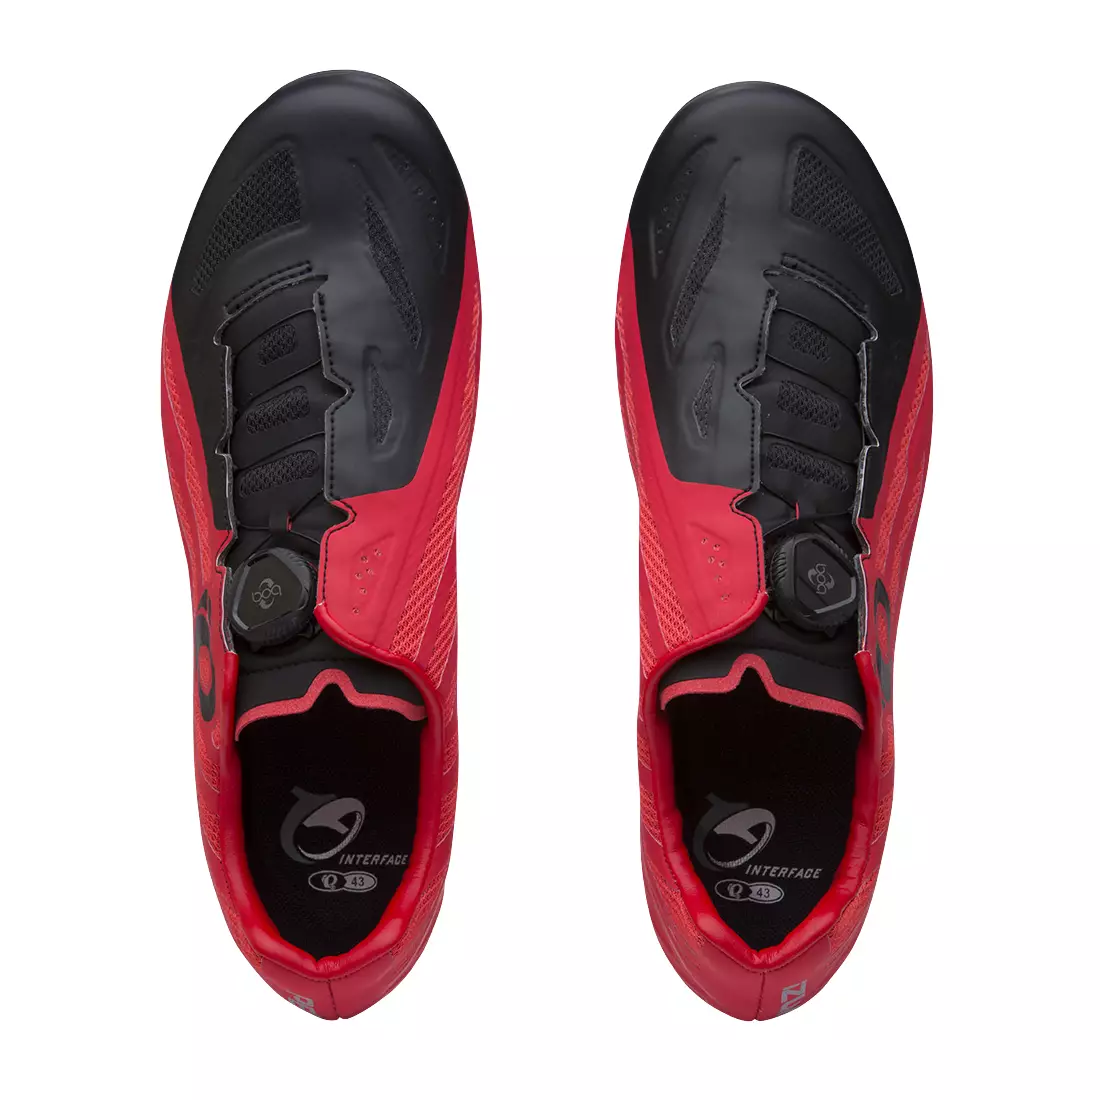 PEARL IZUMI Race Road V5 15101801 - men's road cycling shoes, Rogue Red/Black